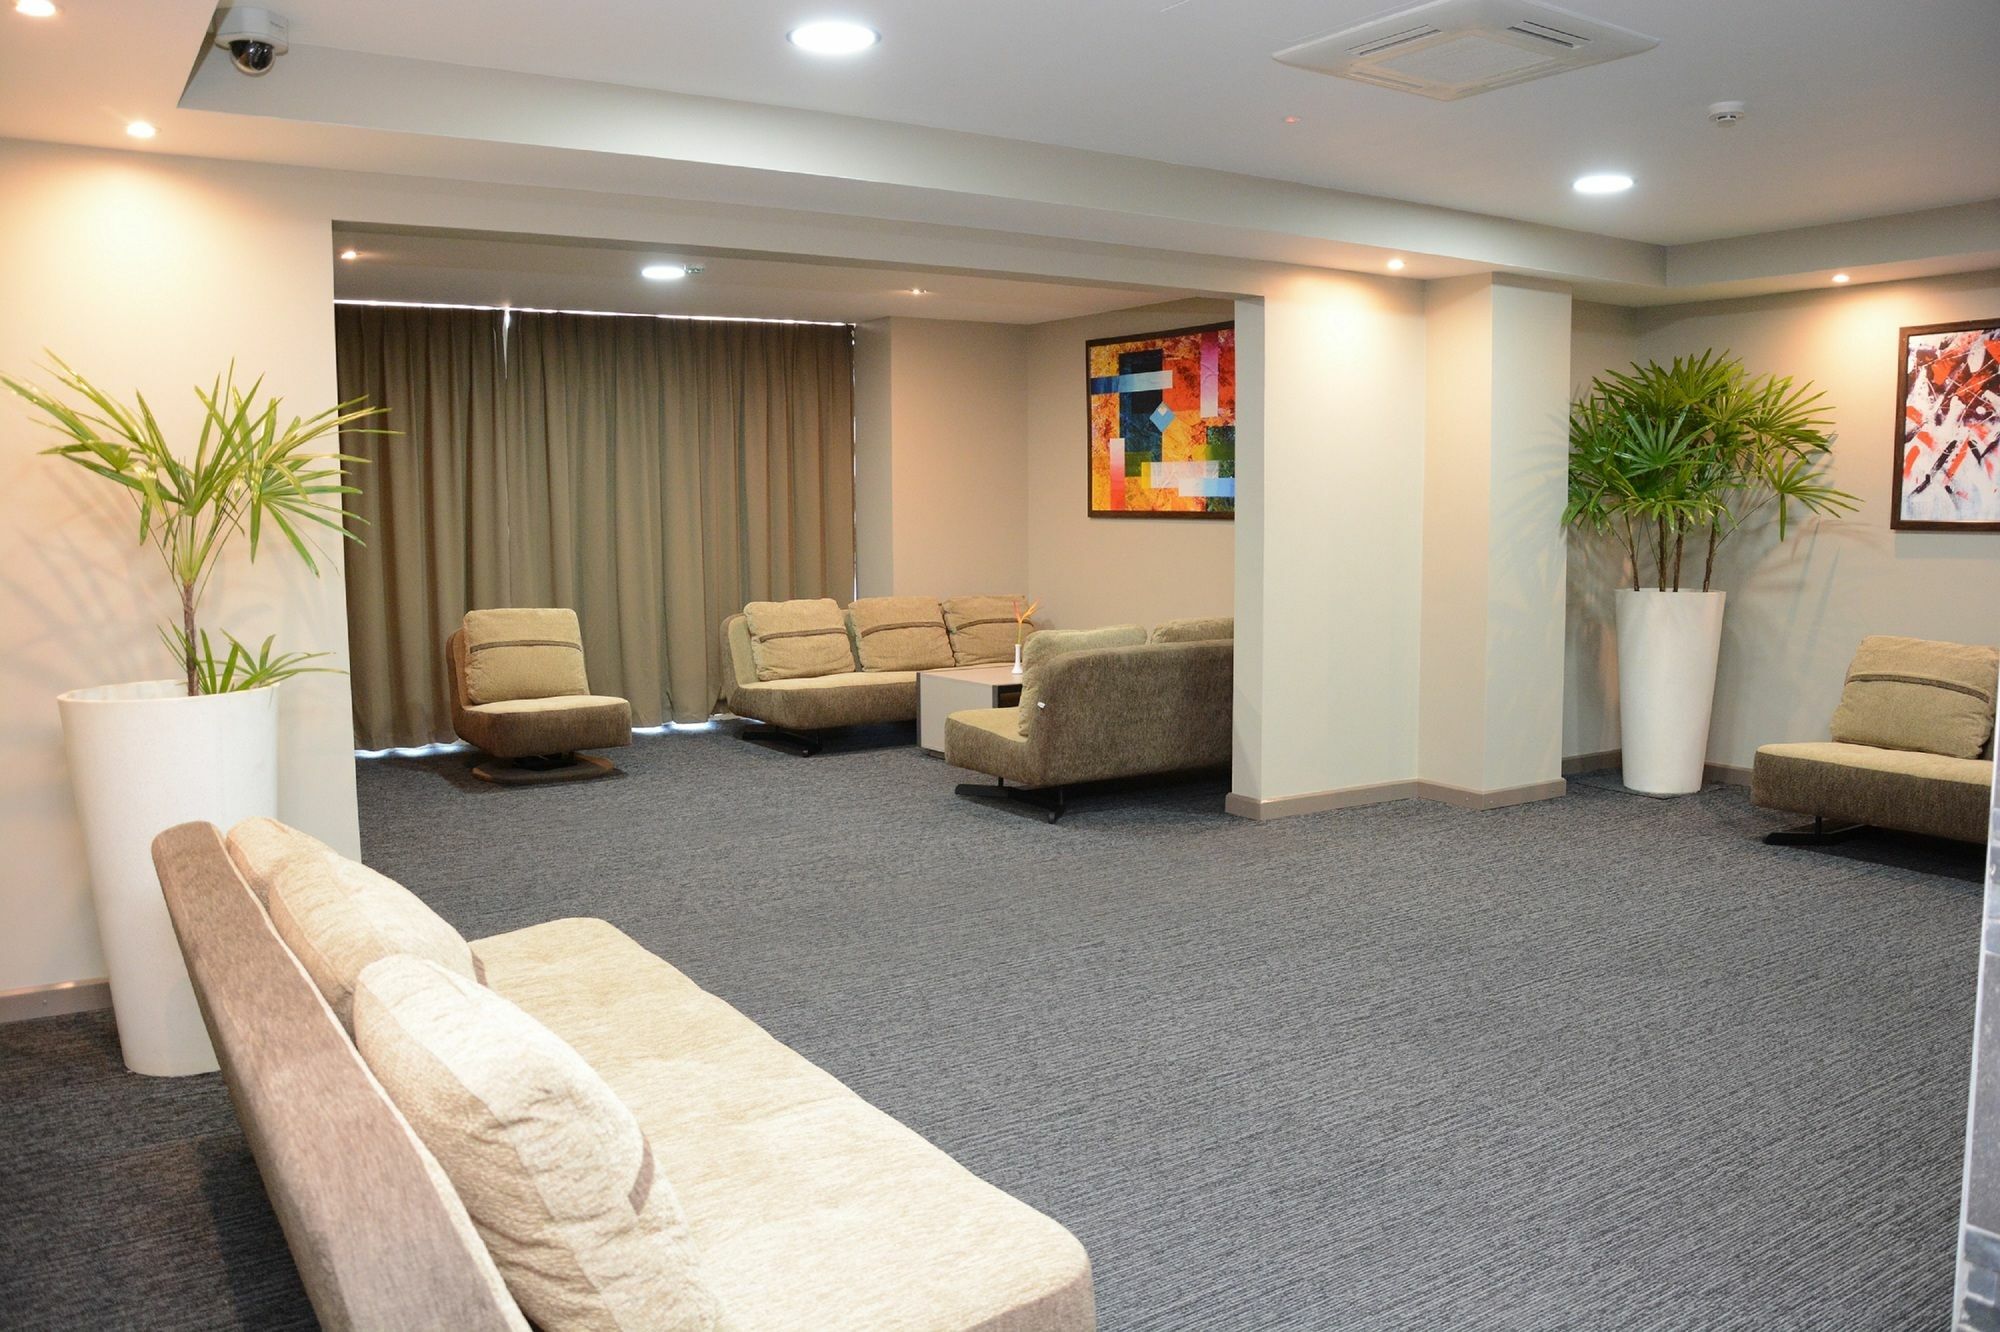 Ratsun Nadi Airport Apartment Hotel Exterior photo